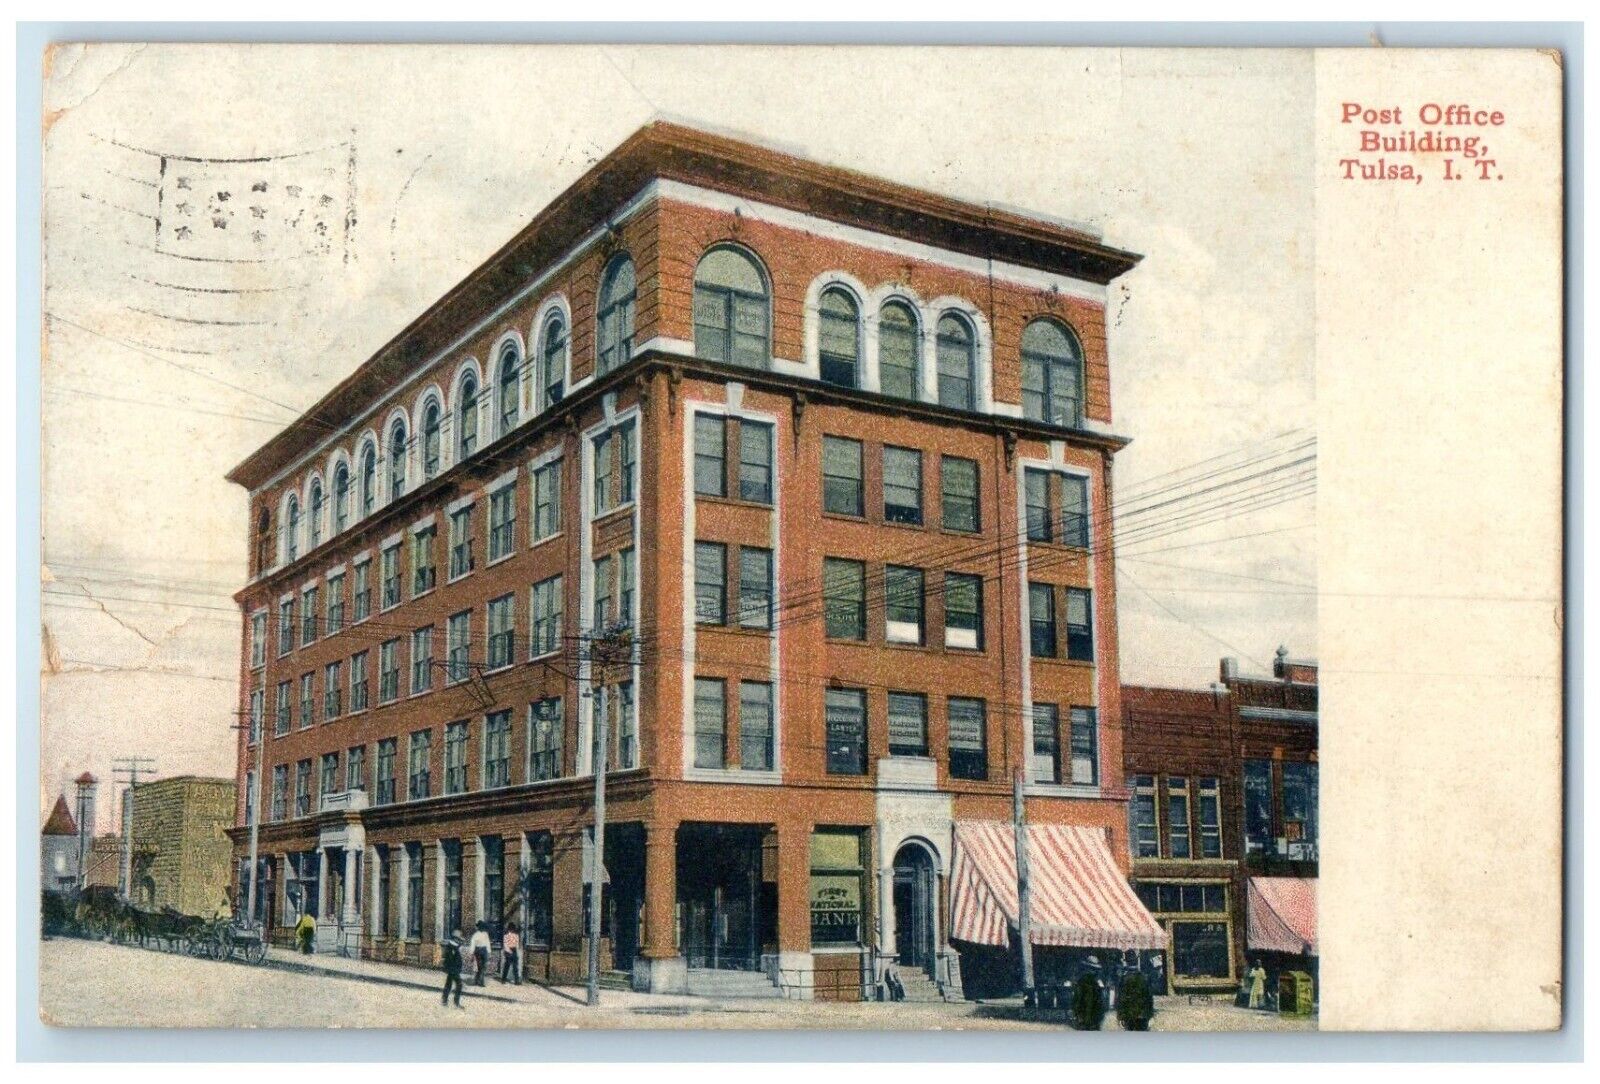 1908 Post Office Building Exterior View Tulsa I.T. Oklahoma OK Vintage Postcard